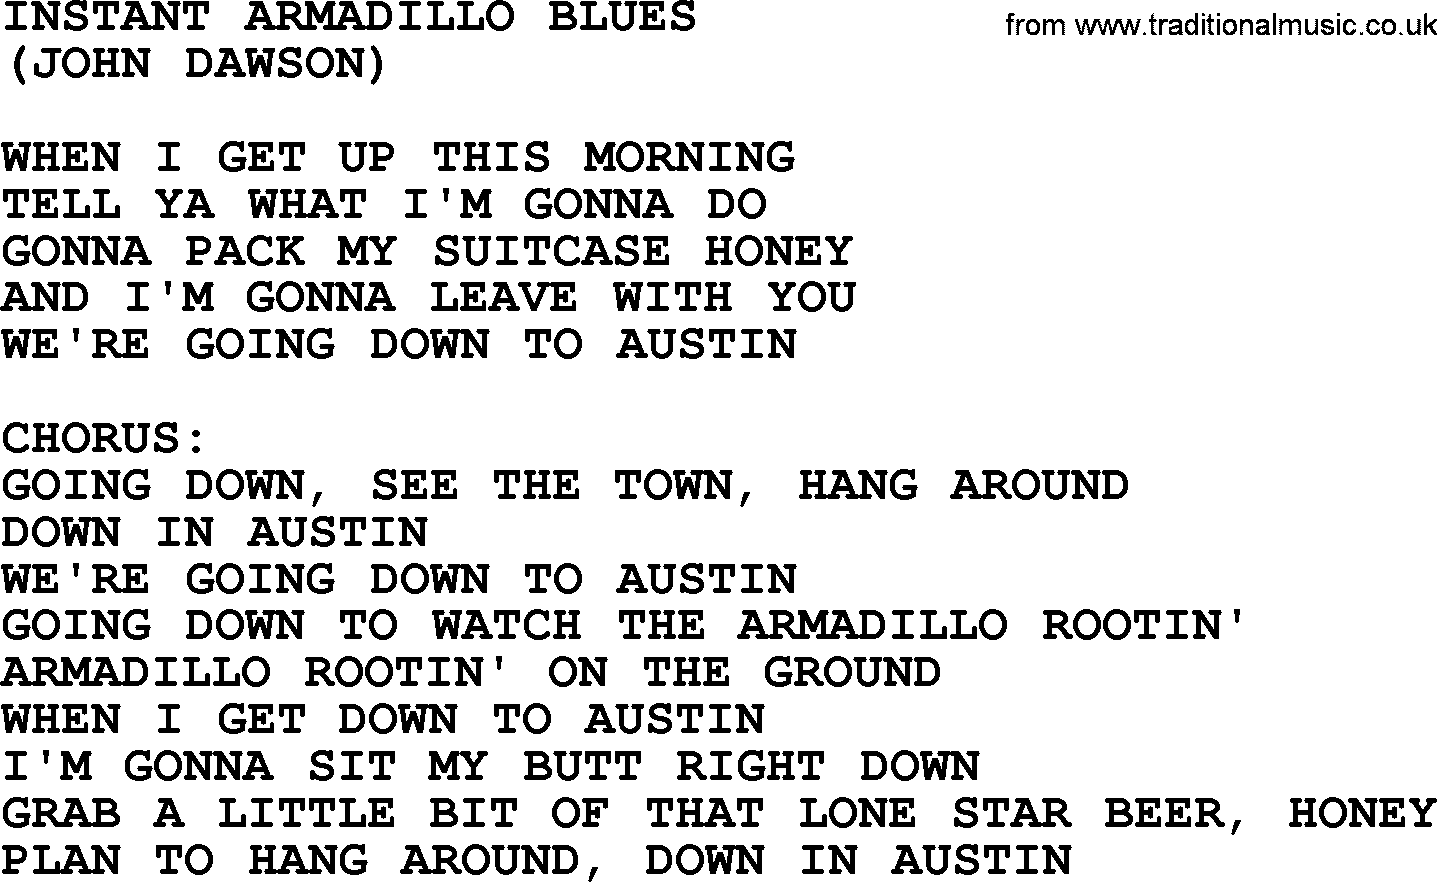 The Byrds song Instant Armadillo Blues, lyrics